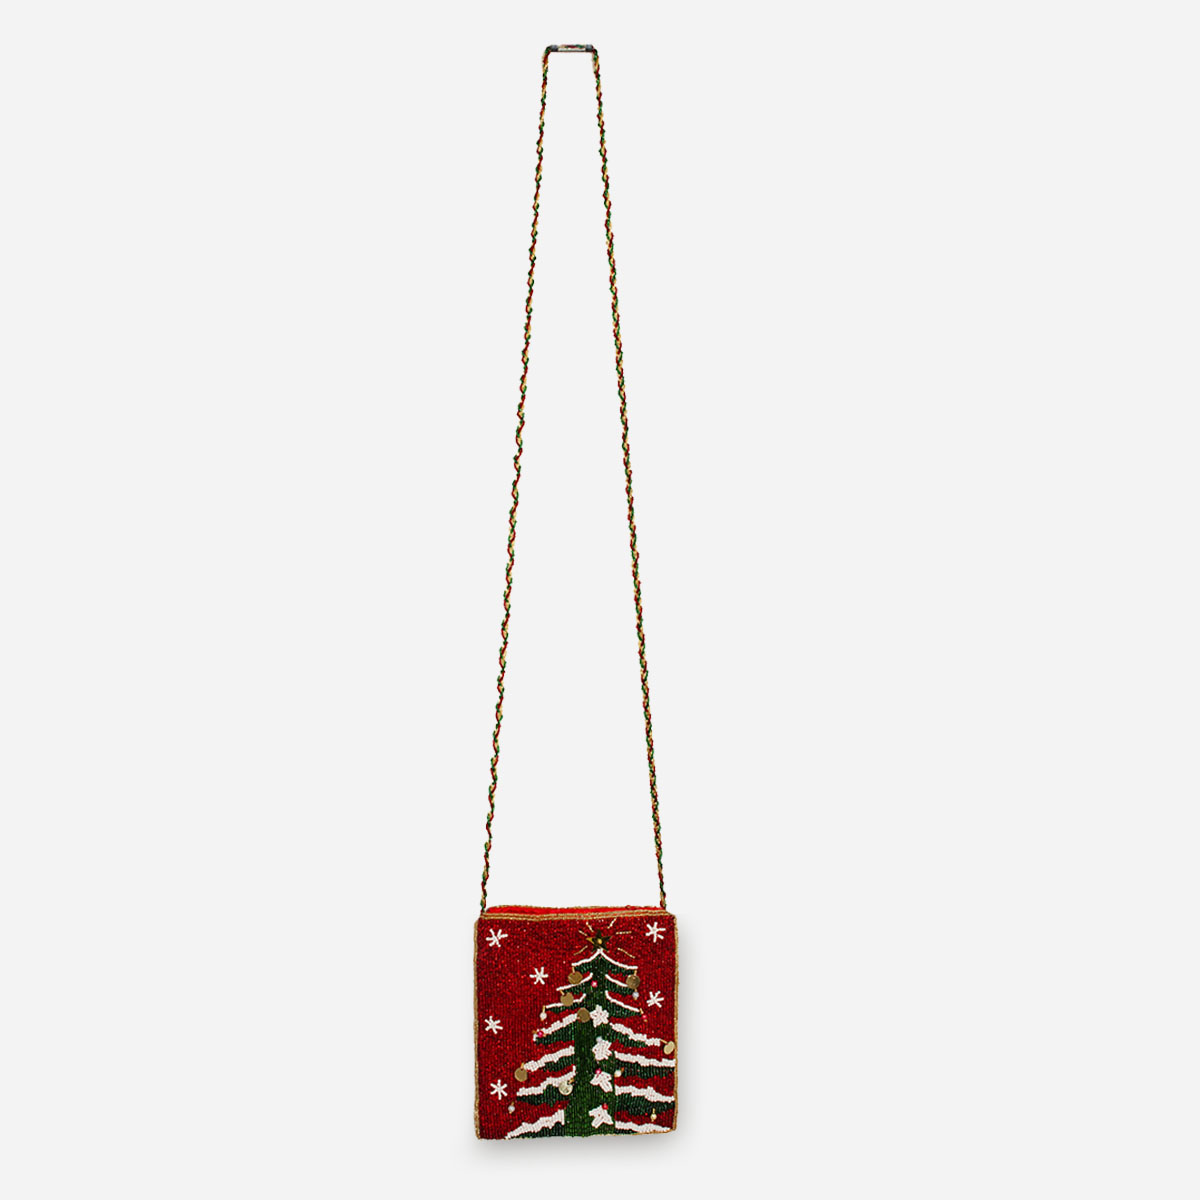 Beaded Christmas mini purse